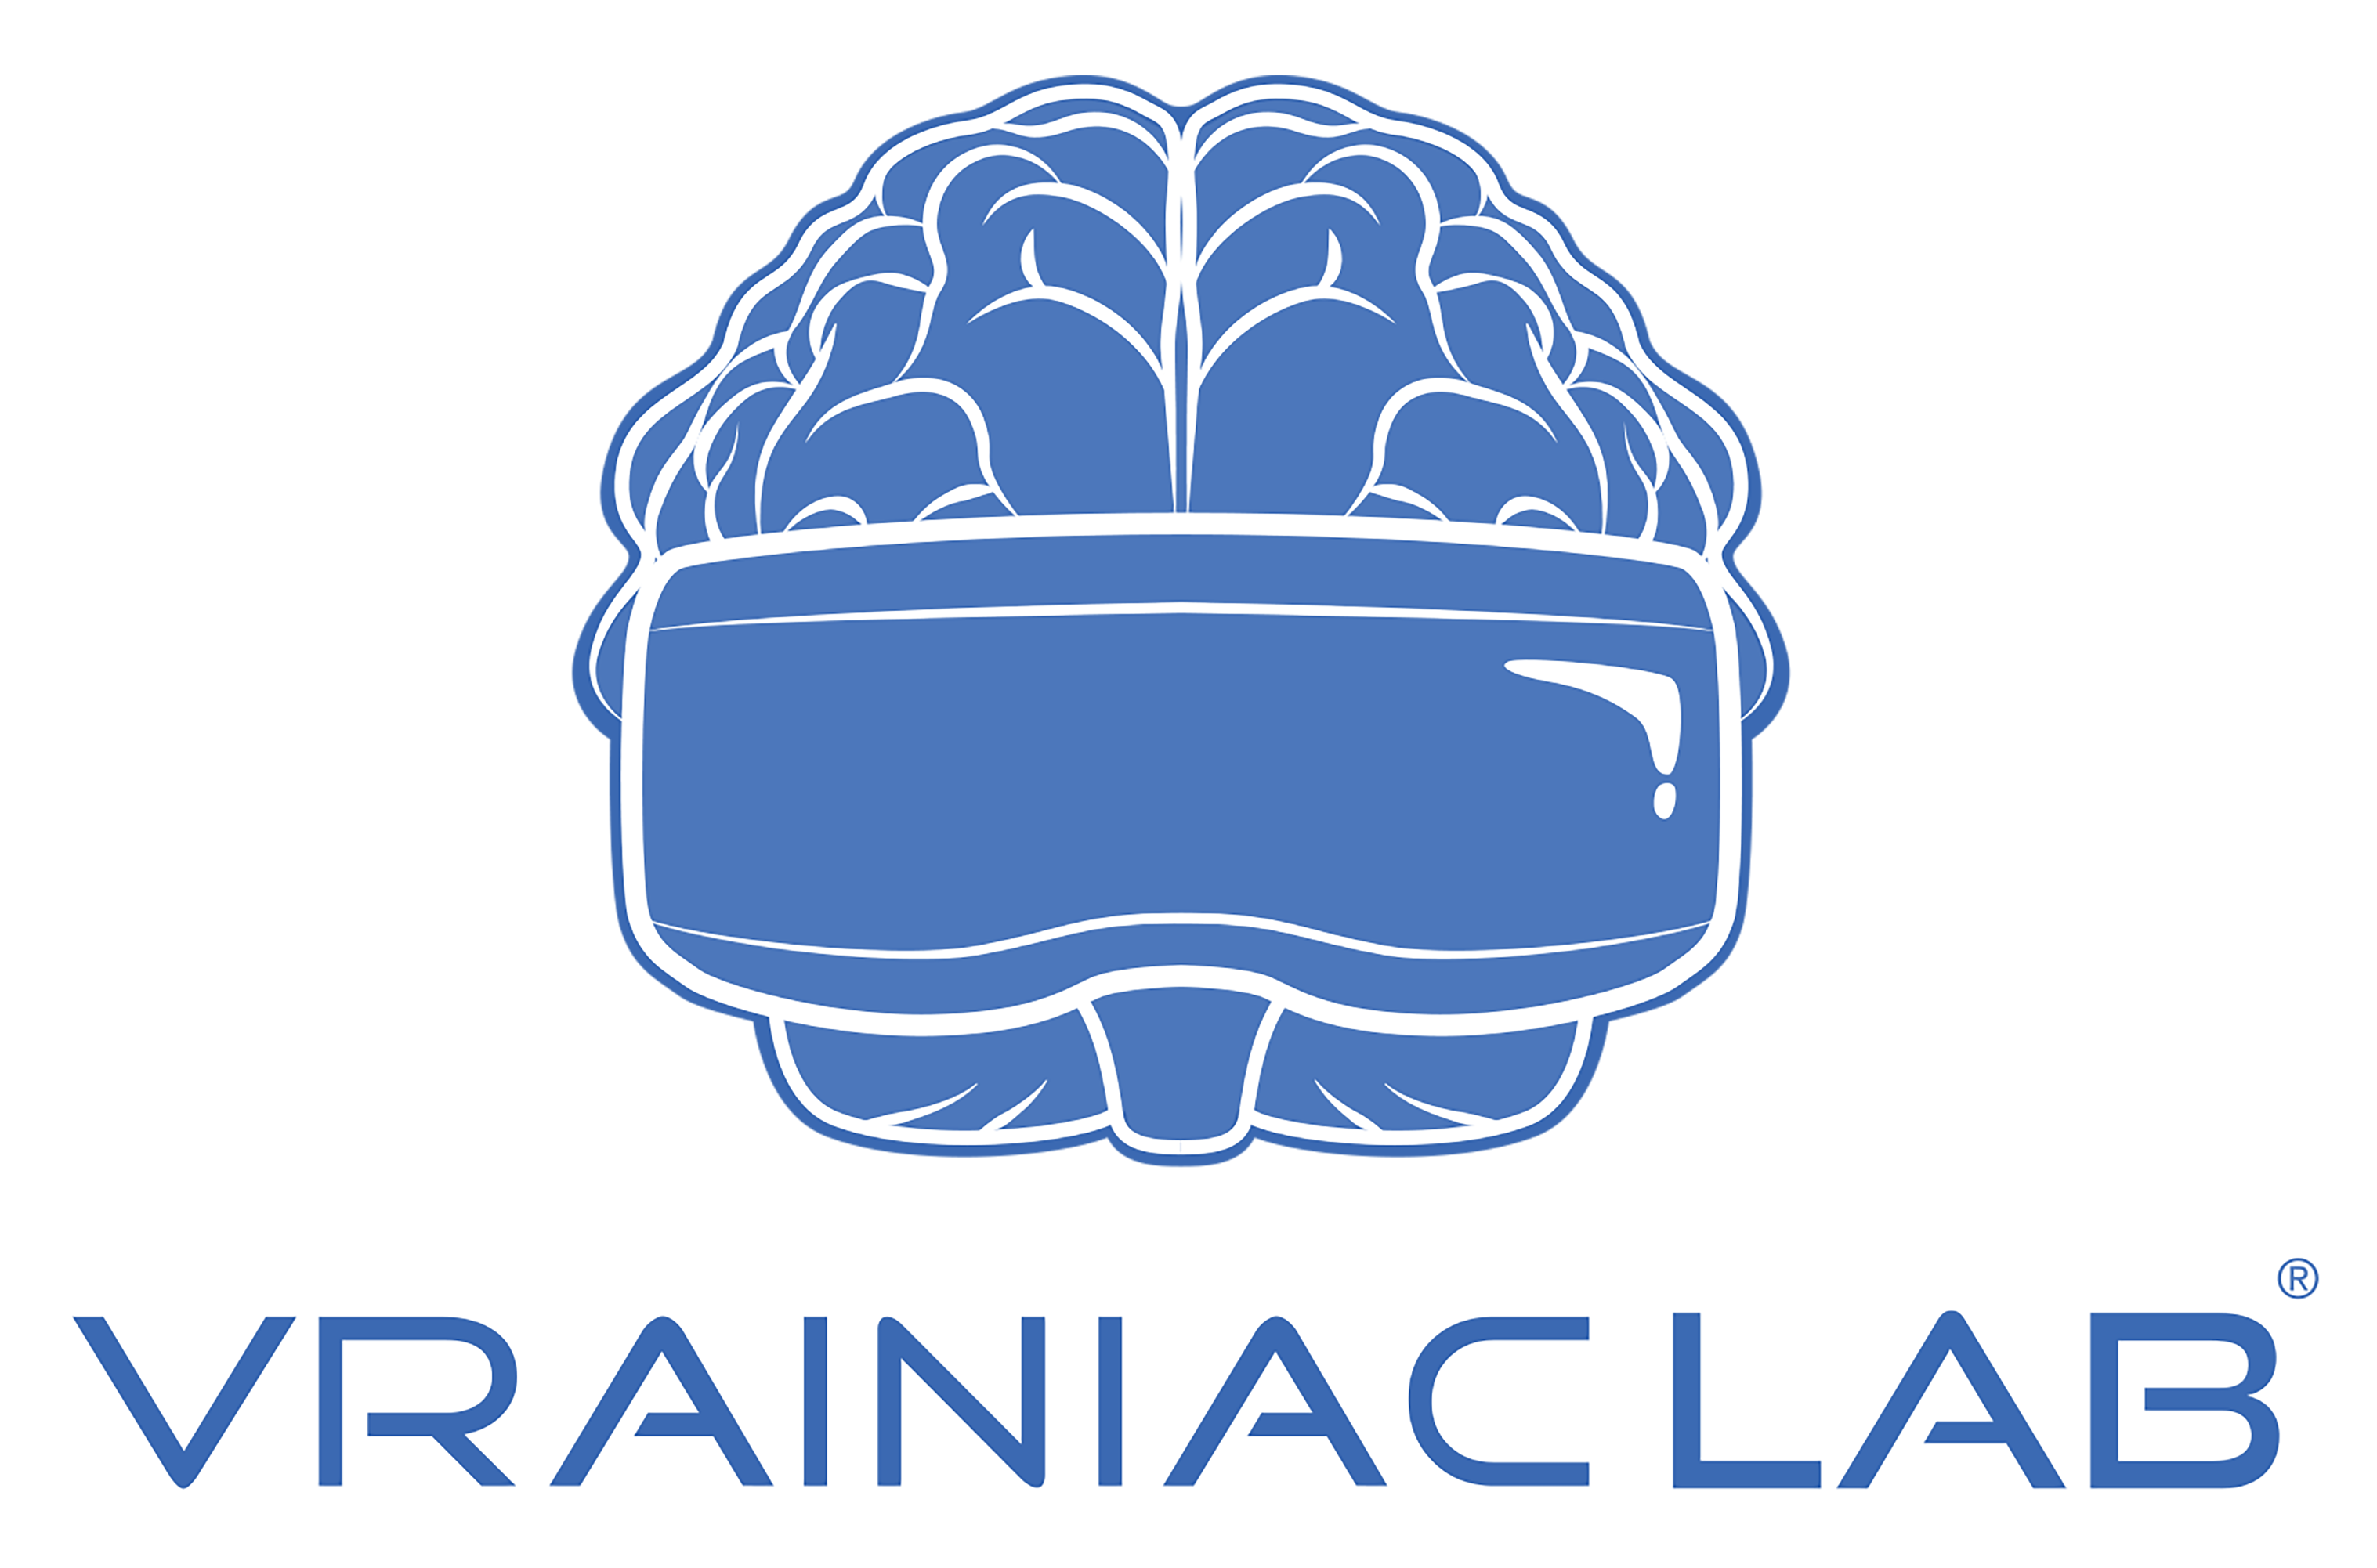 VrainiacLab logo image